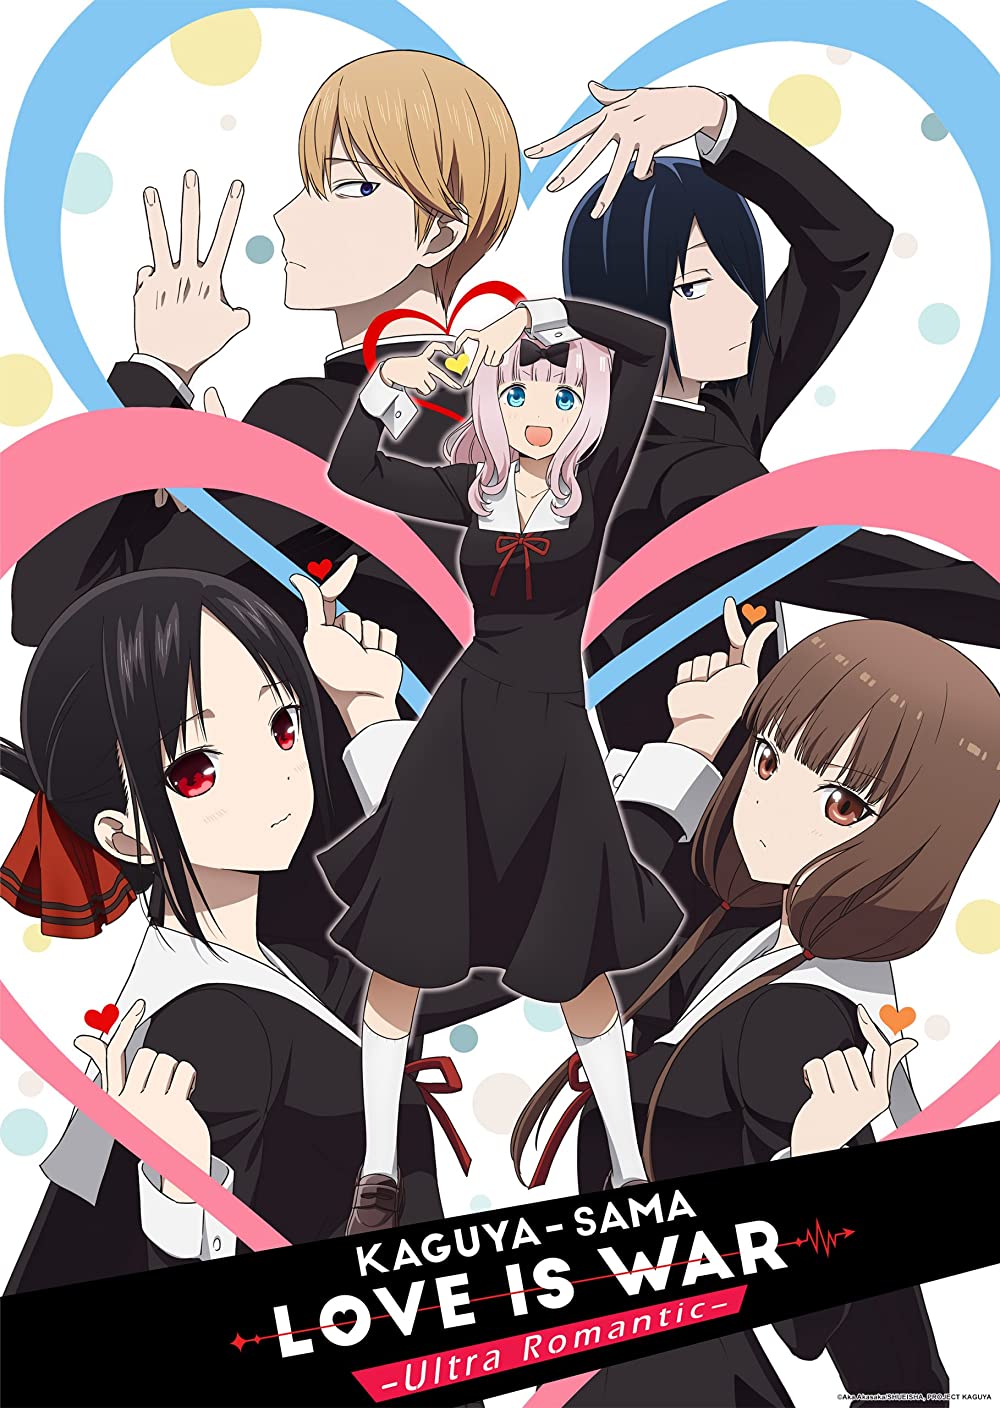 DOWNLOAD: Kaguya-sama: Love is War Season 1 (COMPLETE) [Anime Series] |  TOOXTRALOADED